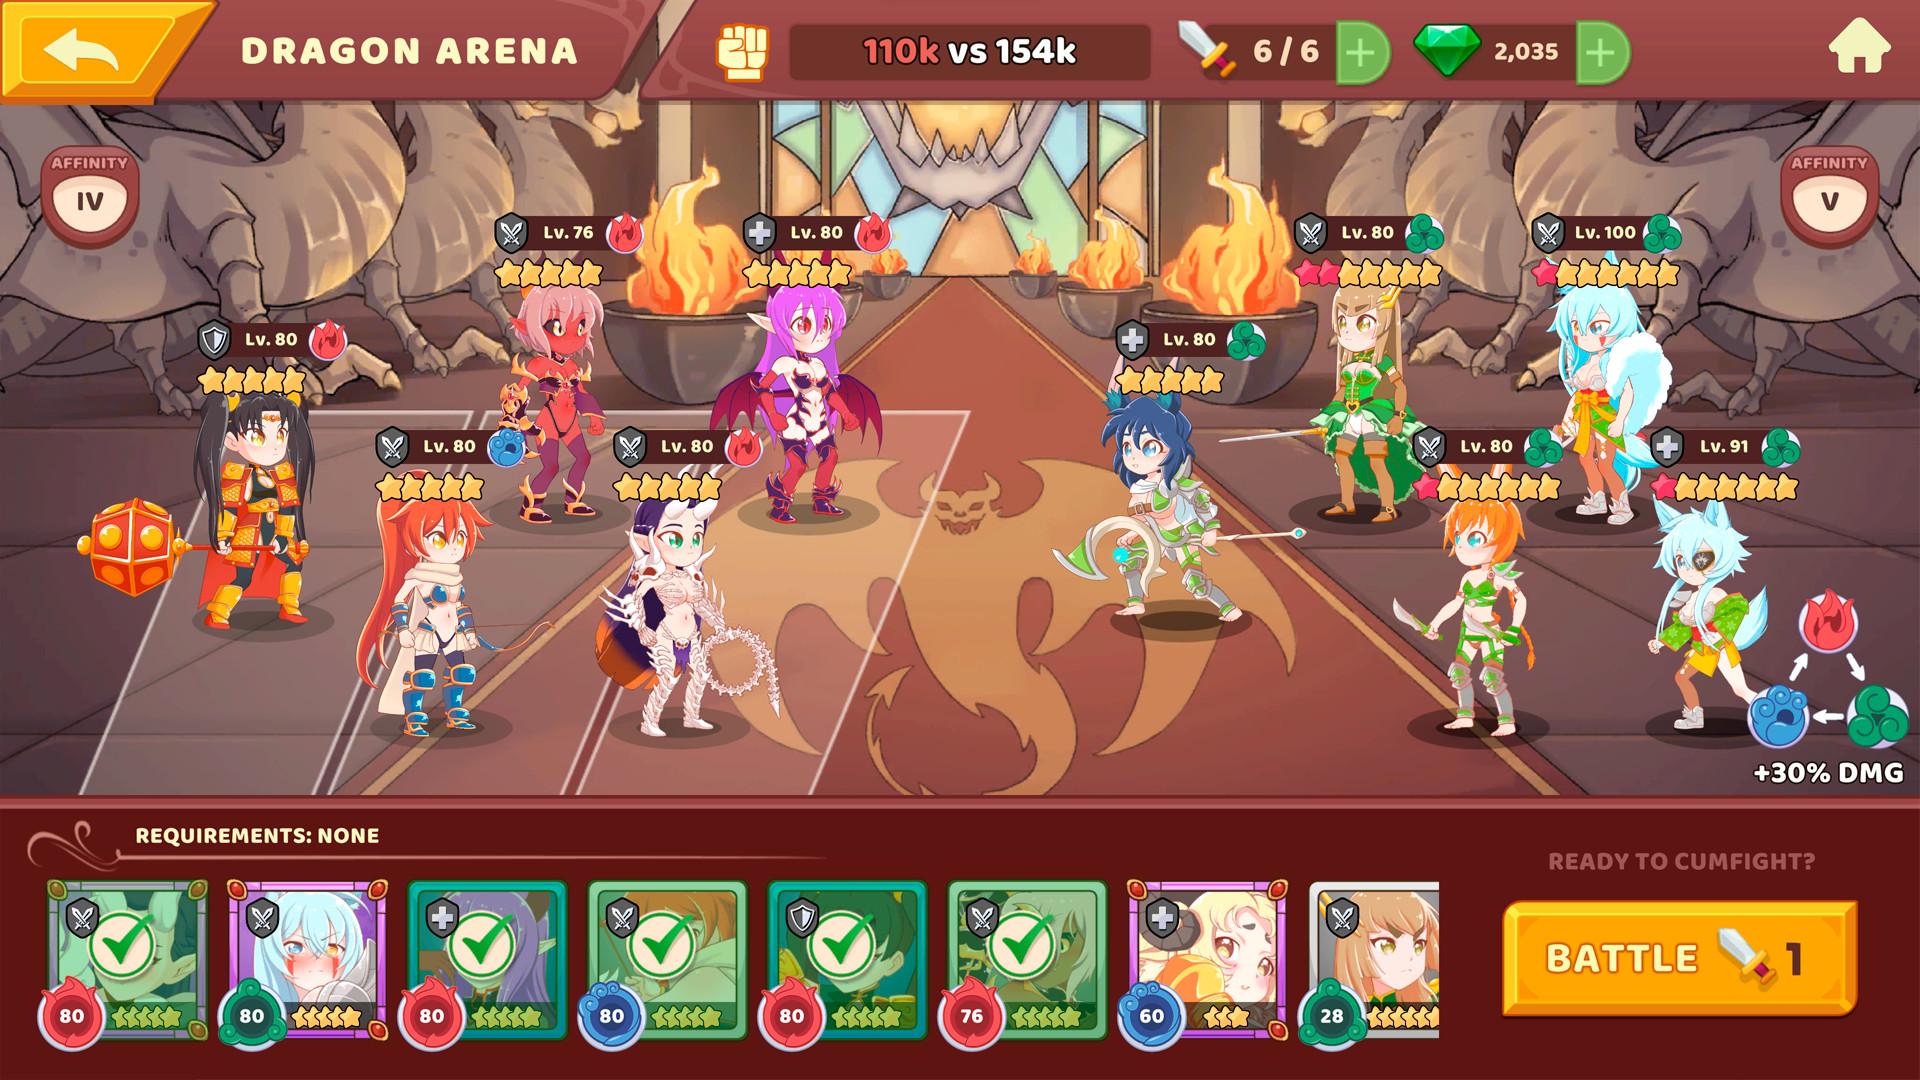 Screenshot №1 from game Eros Fantasy